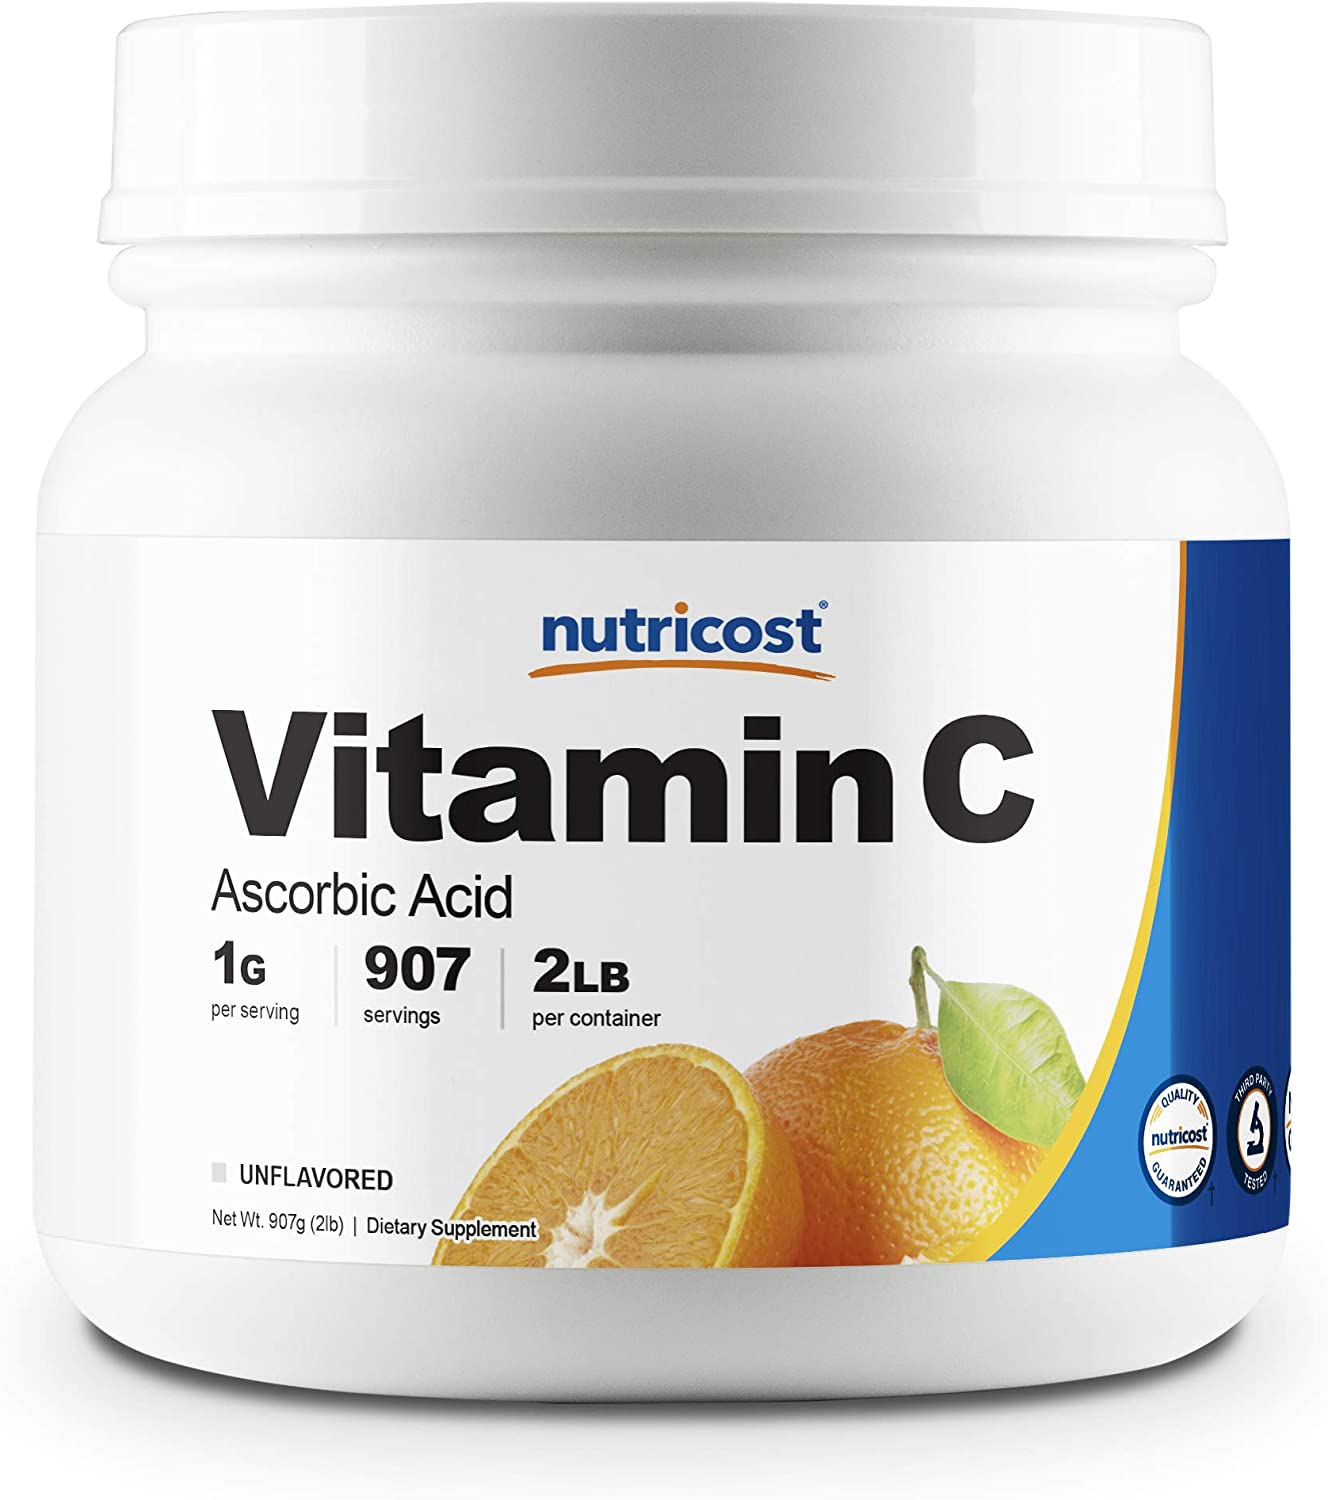 Review of Nutricost Pure Ascorbic Acid Powder (Vitamin C) 2 LBS - High Quality, Gluten Free, Non-GMO